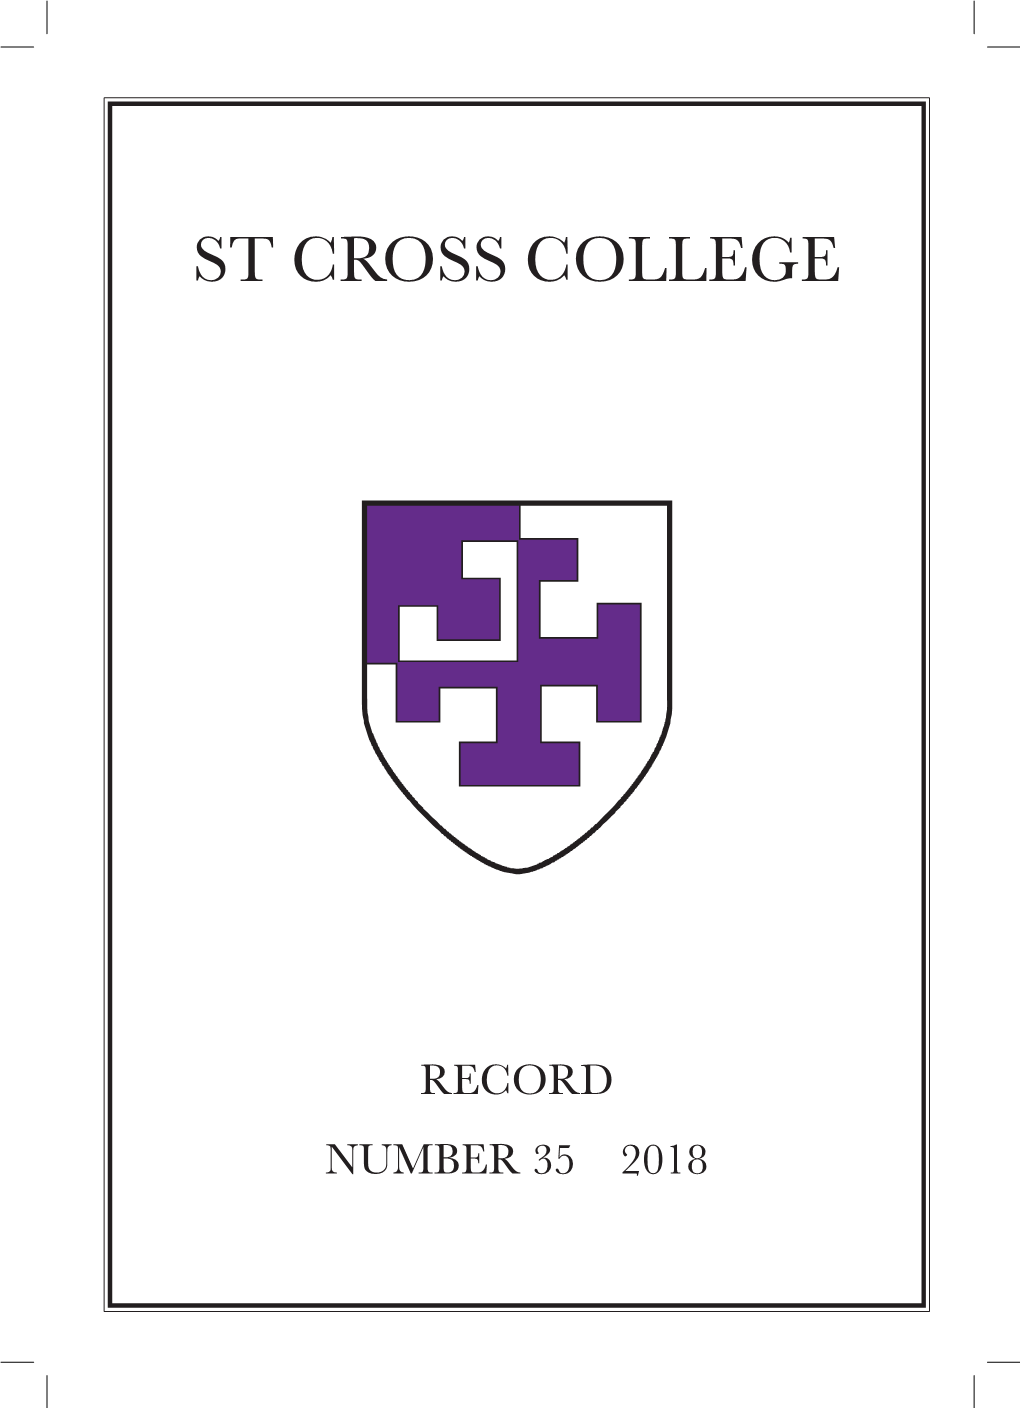 St Cross College